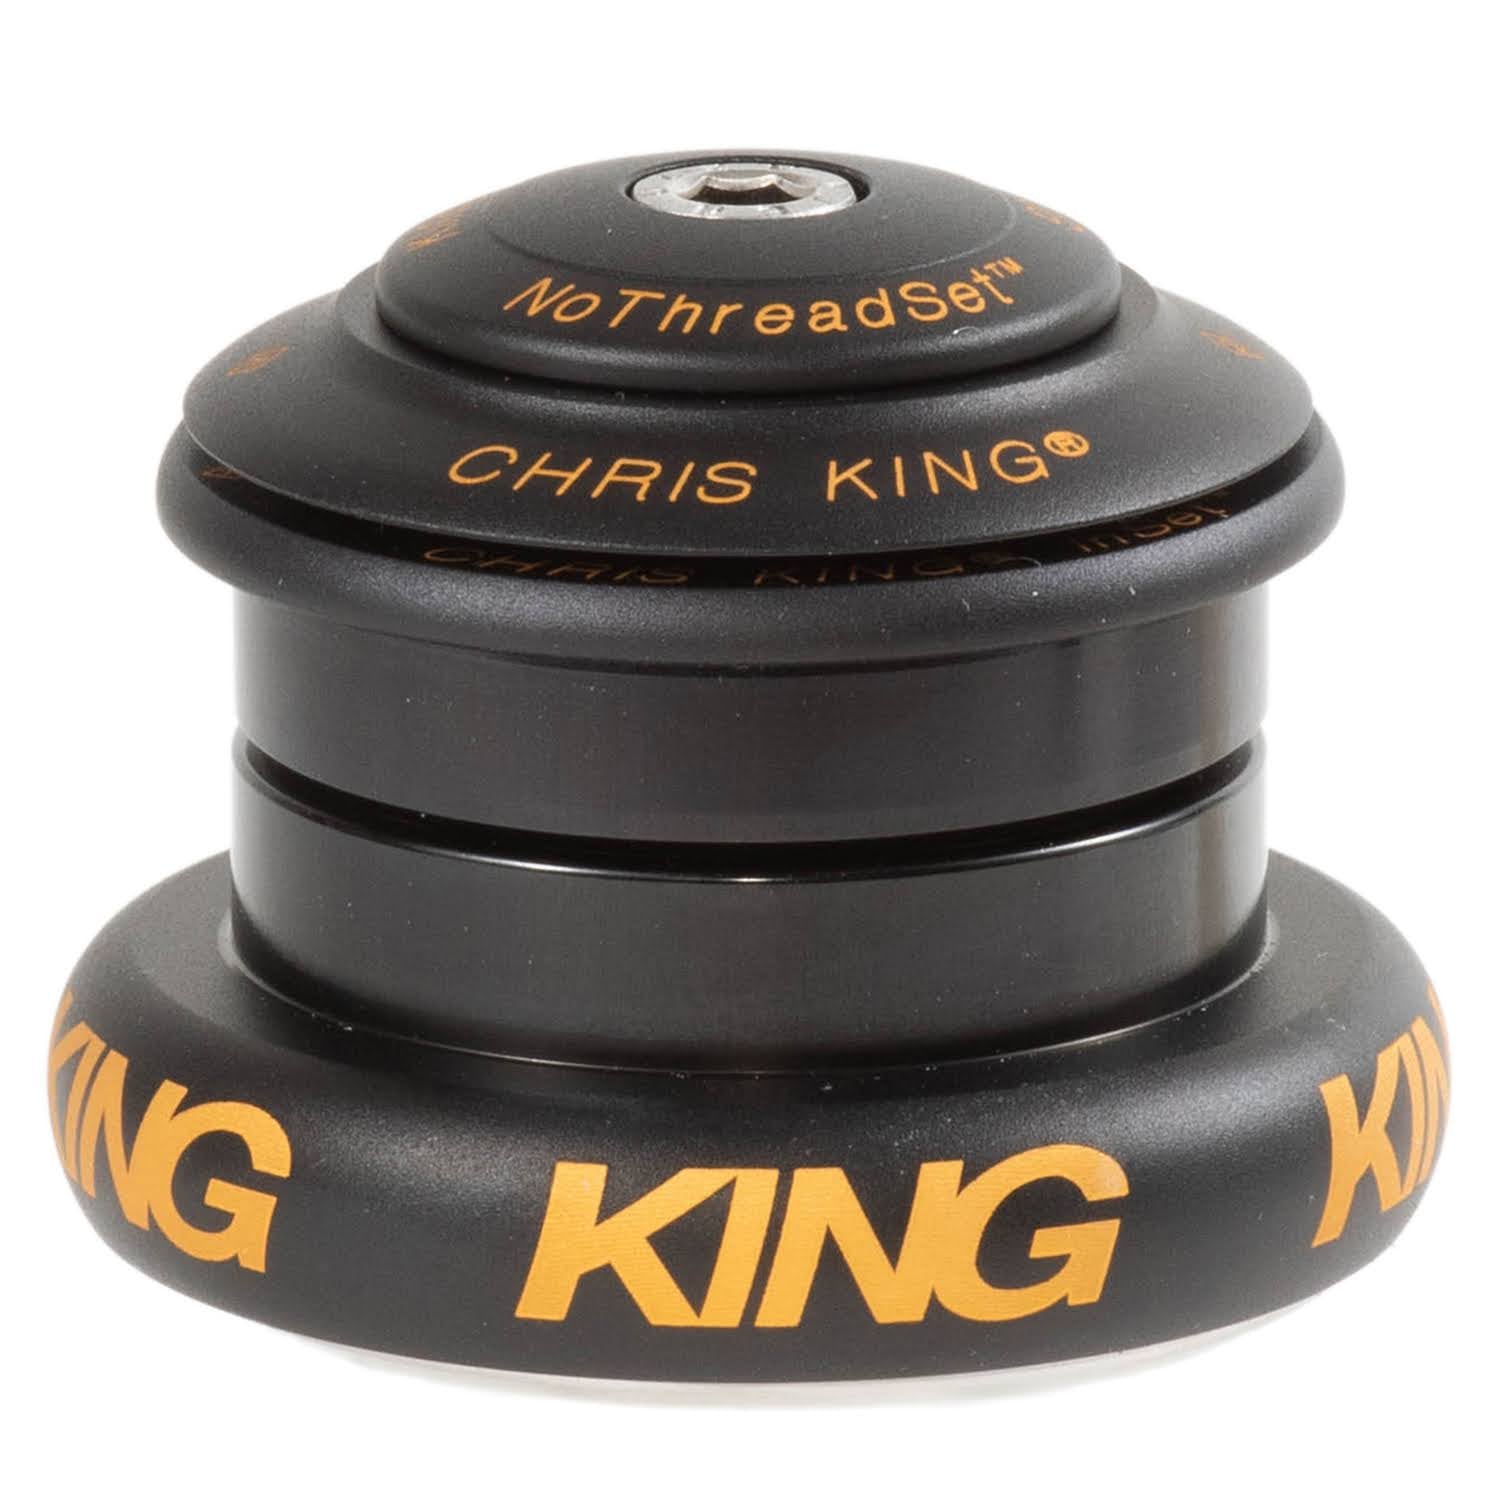 CHRIS KING NoThreadSet Two Tone Black Gold